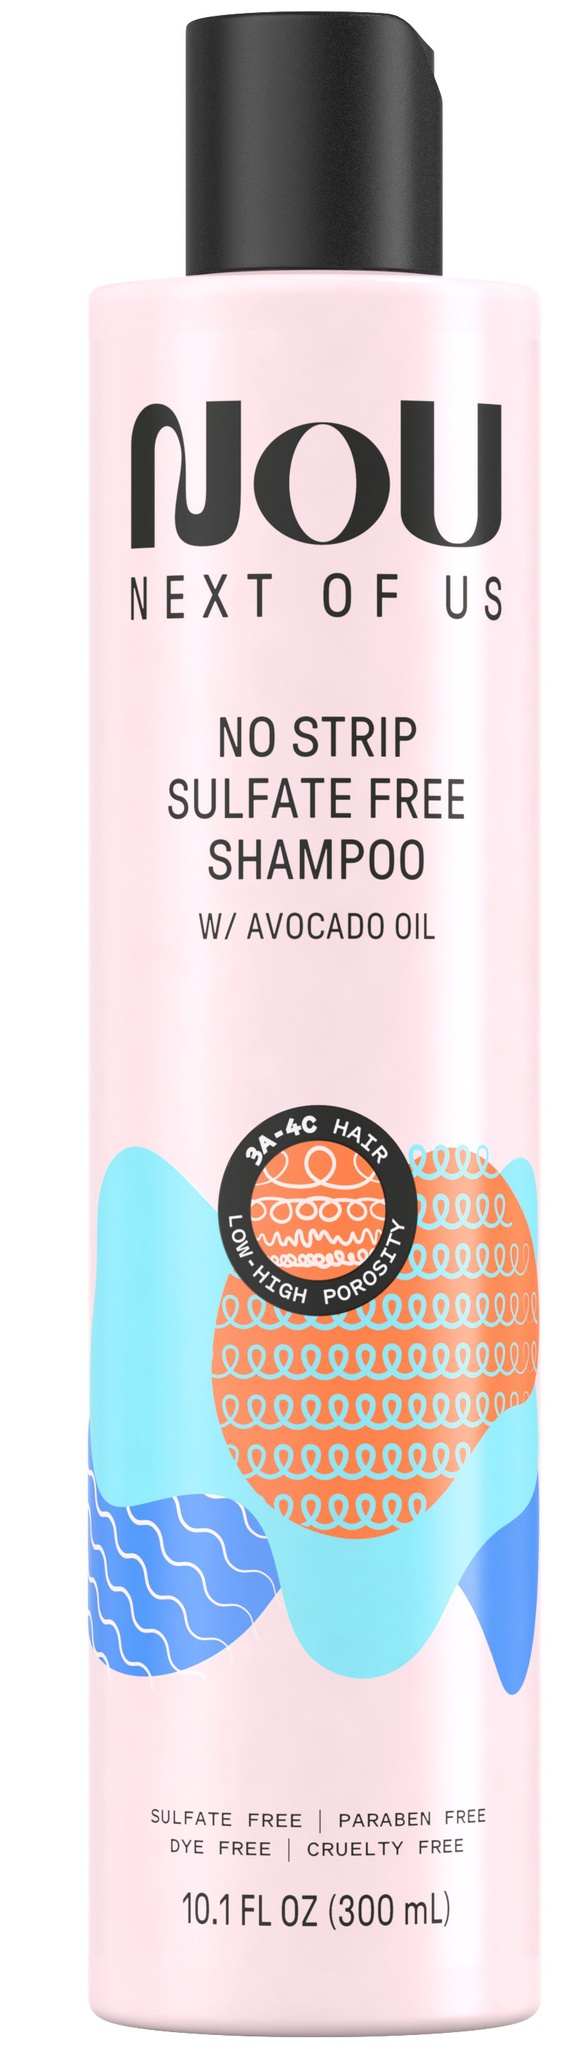 Next of Us No Strip Sulfate Free Shampoo